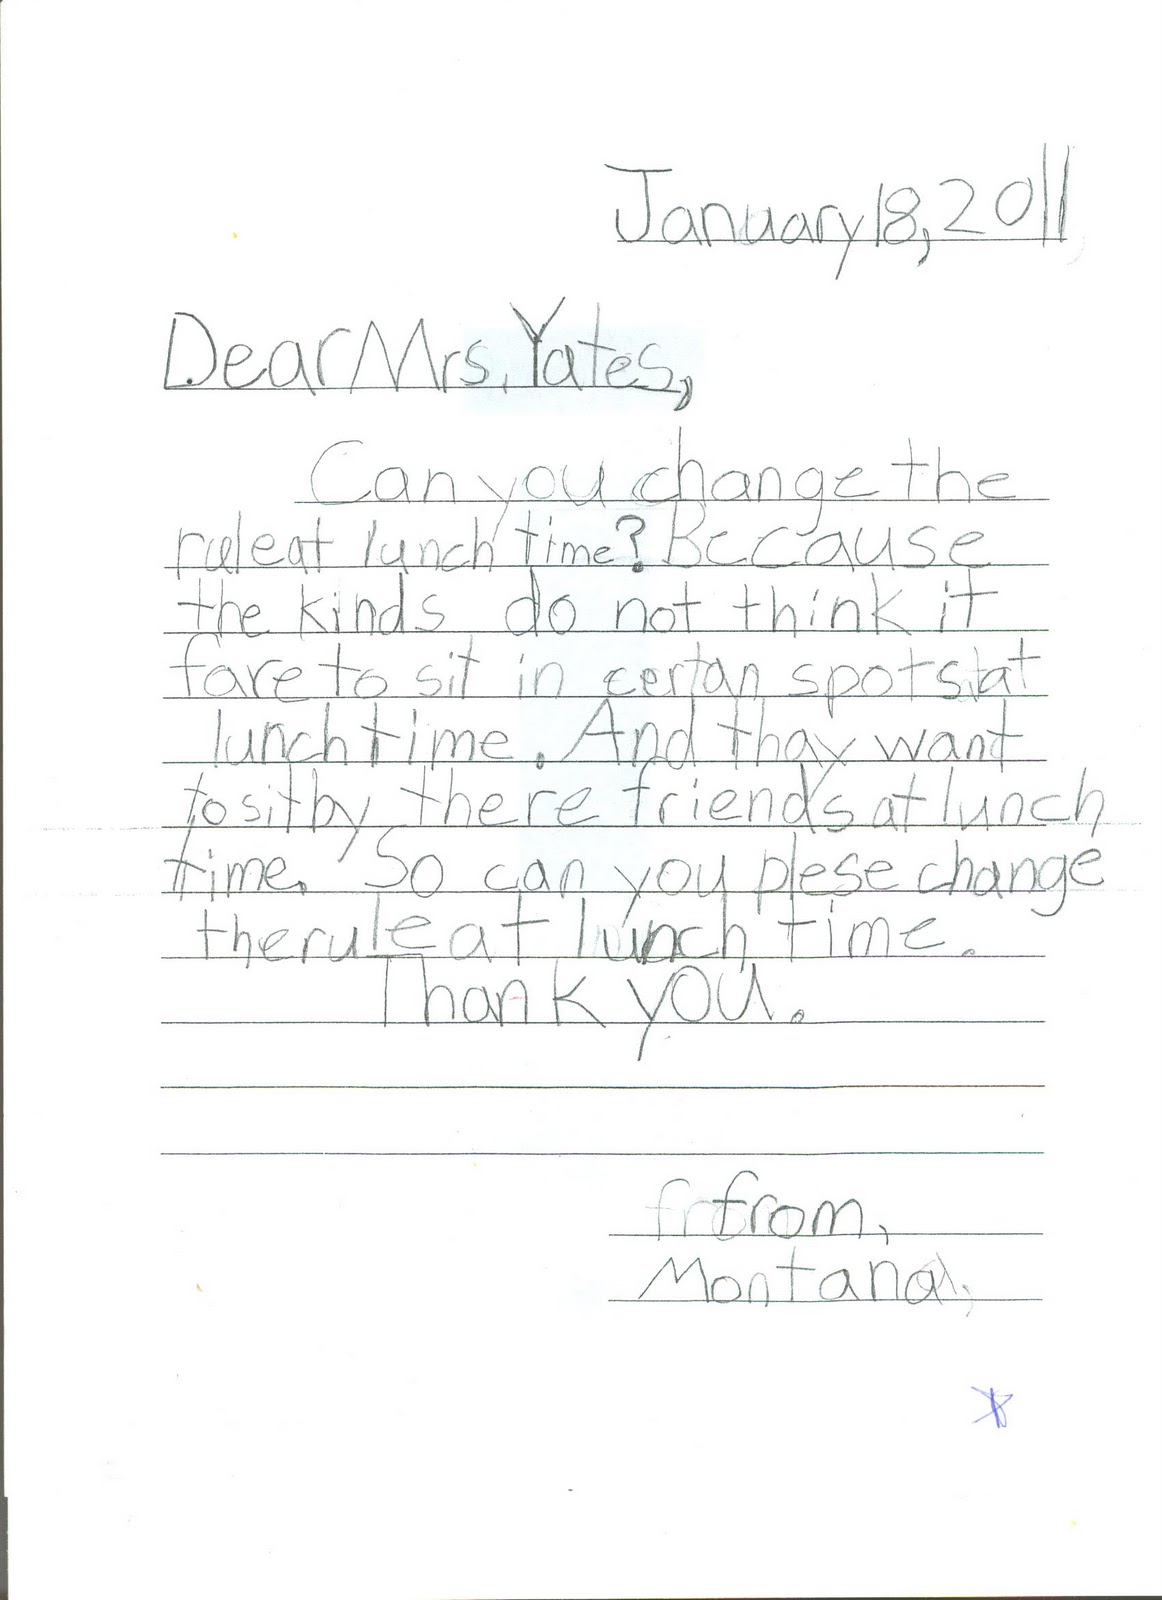 Persuasive Letter Template For Kids